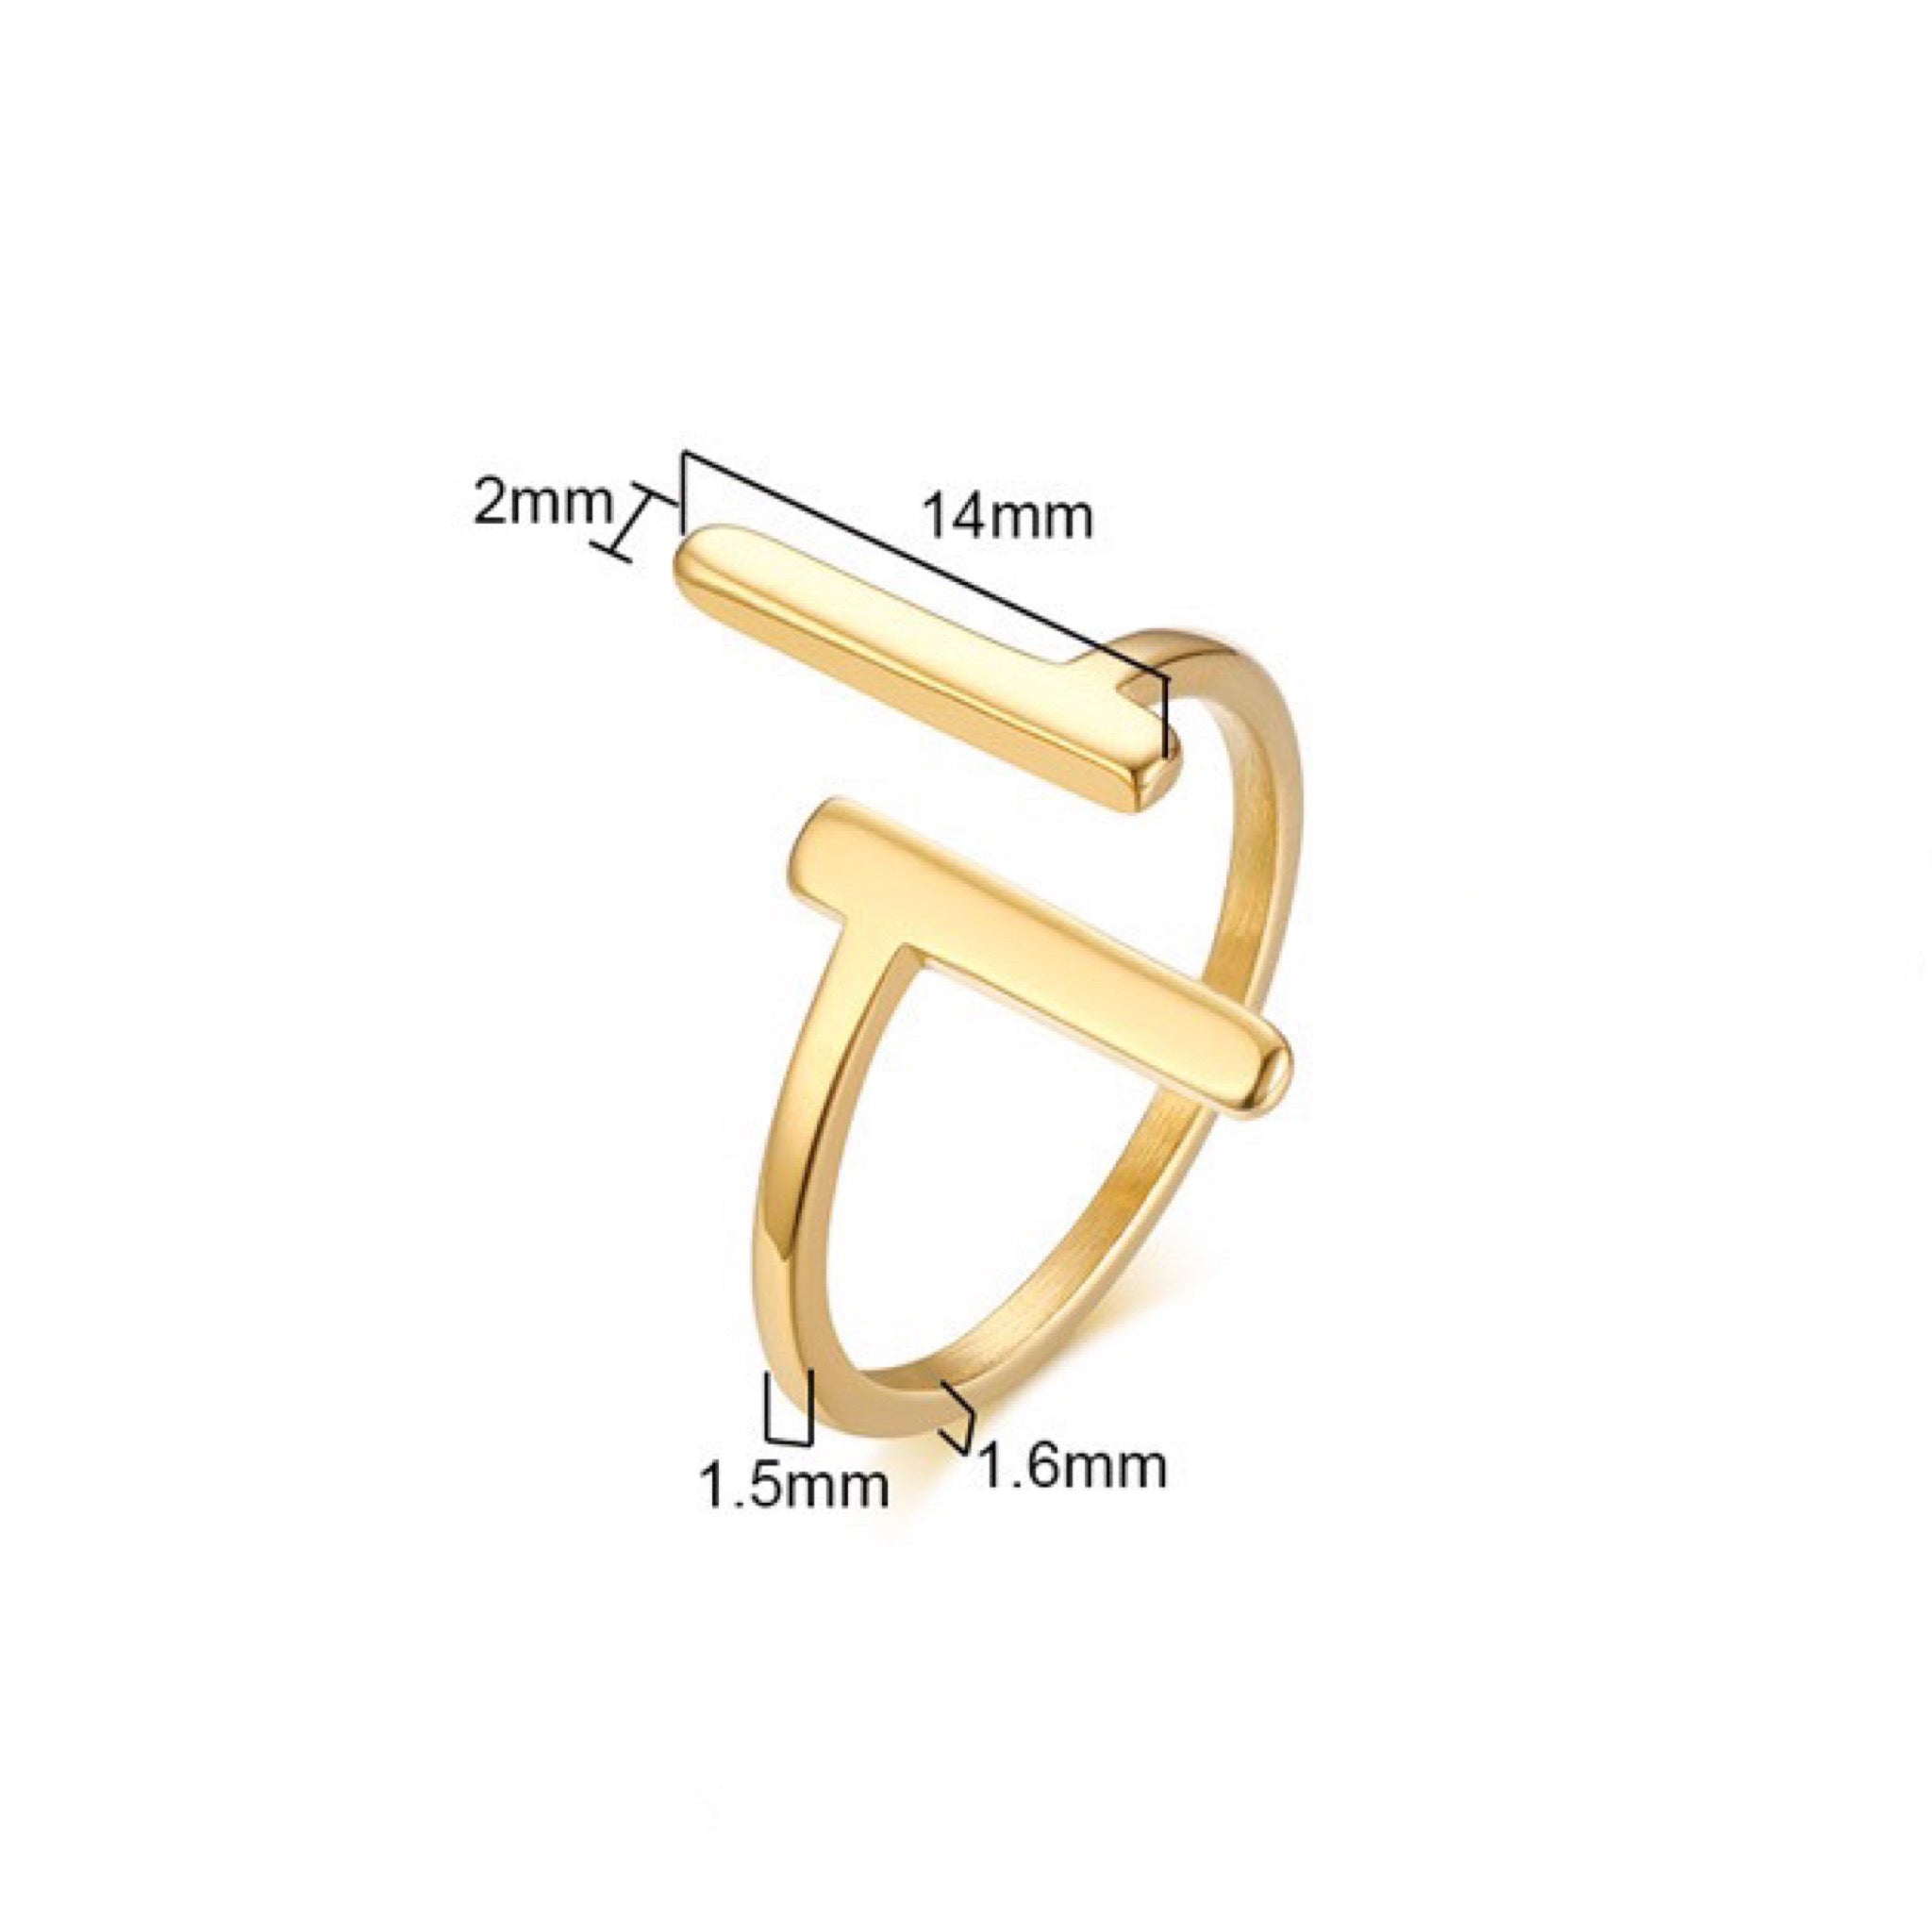 Parallel bar stylish ring freeshipping - Ollijewelry